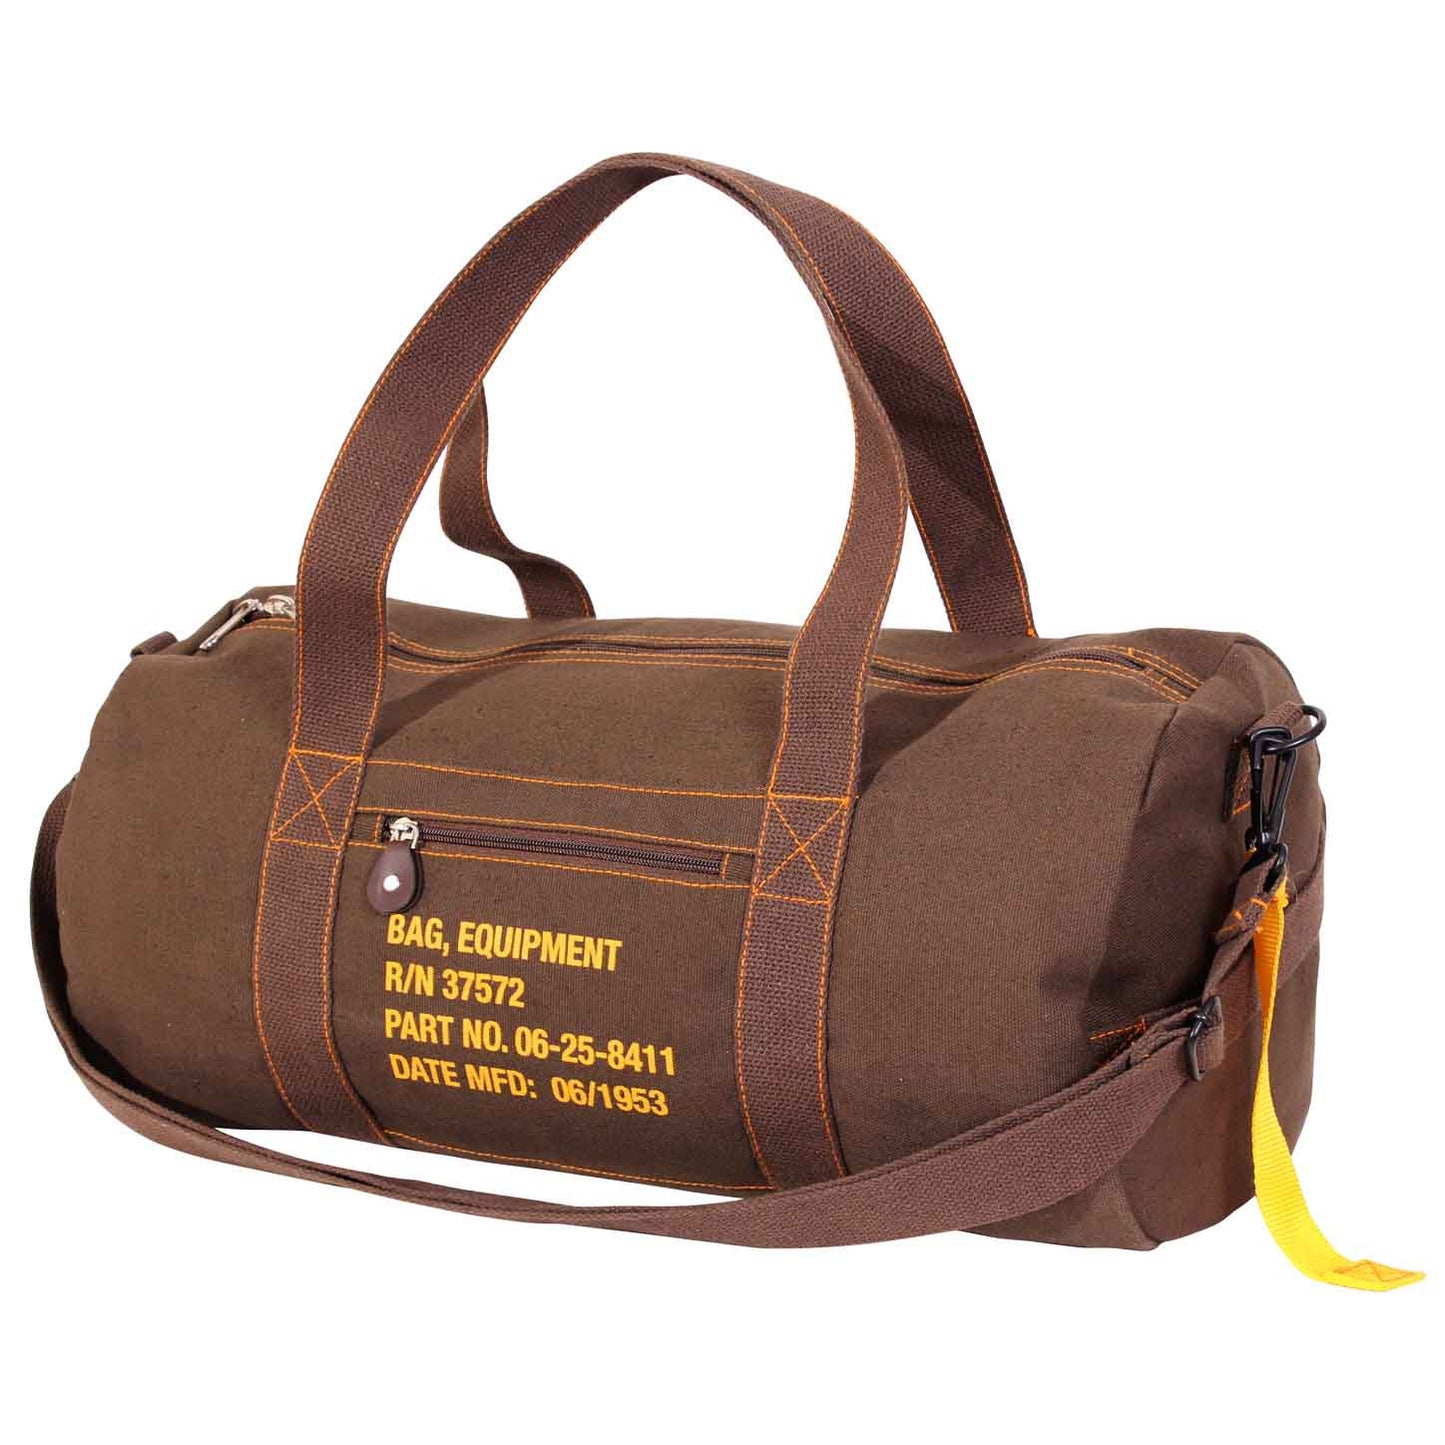 Duffel Bags - Rothco Canvas Equipment Bag